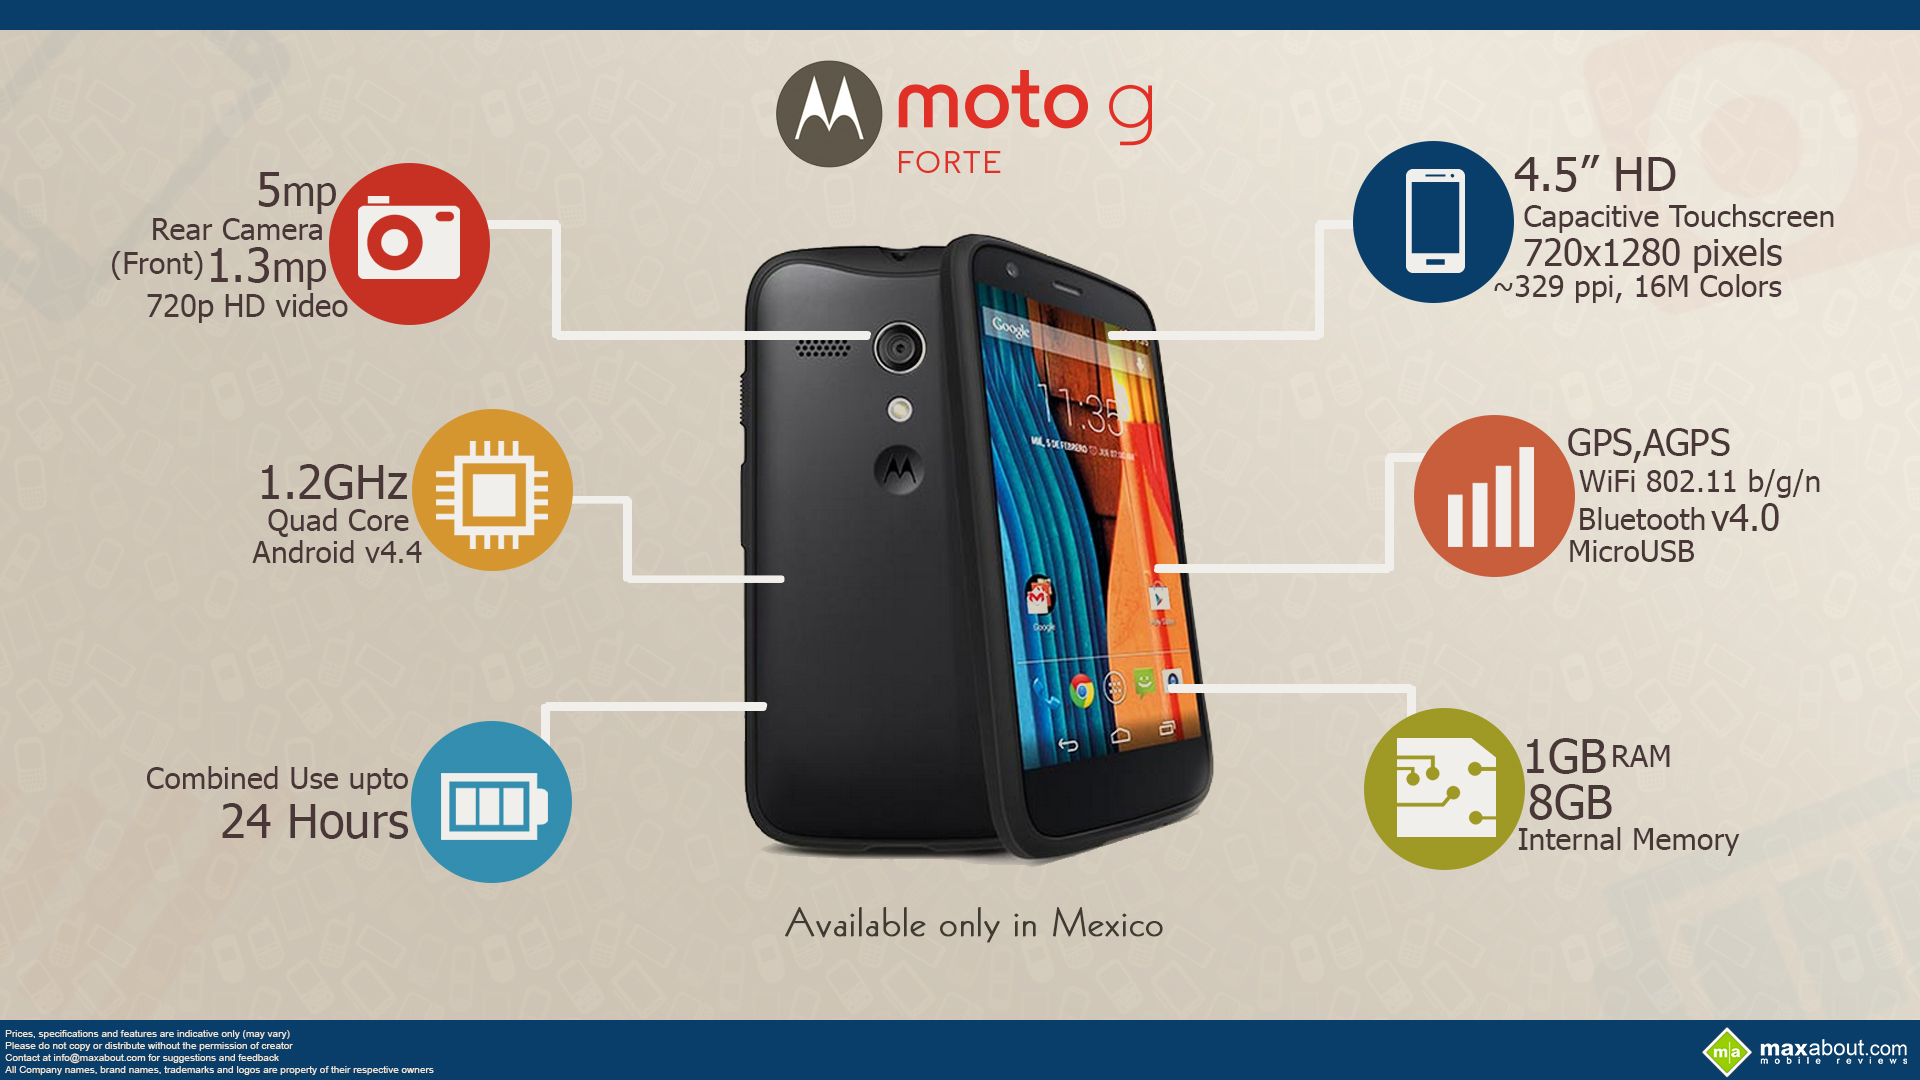 Motorola Moto G Forte Amazing Android Smartphone